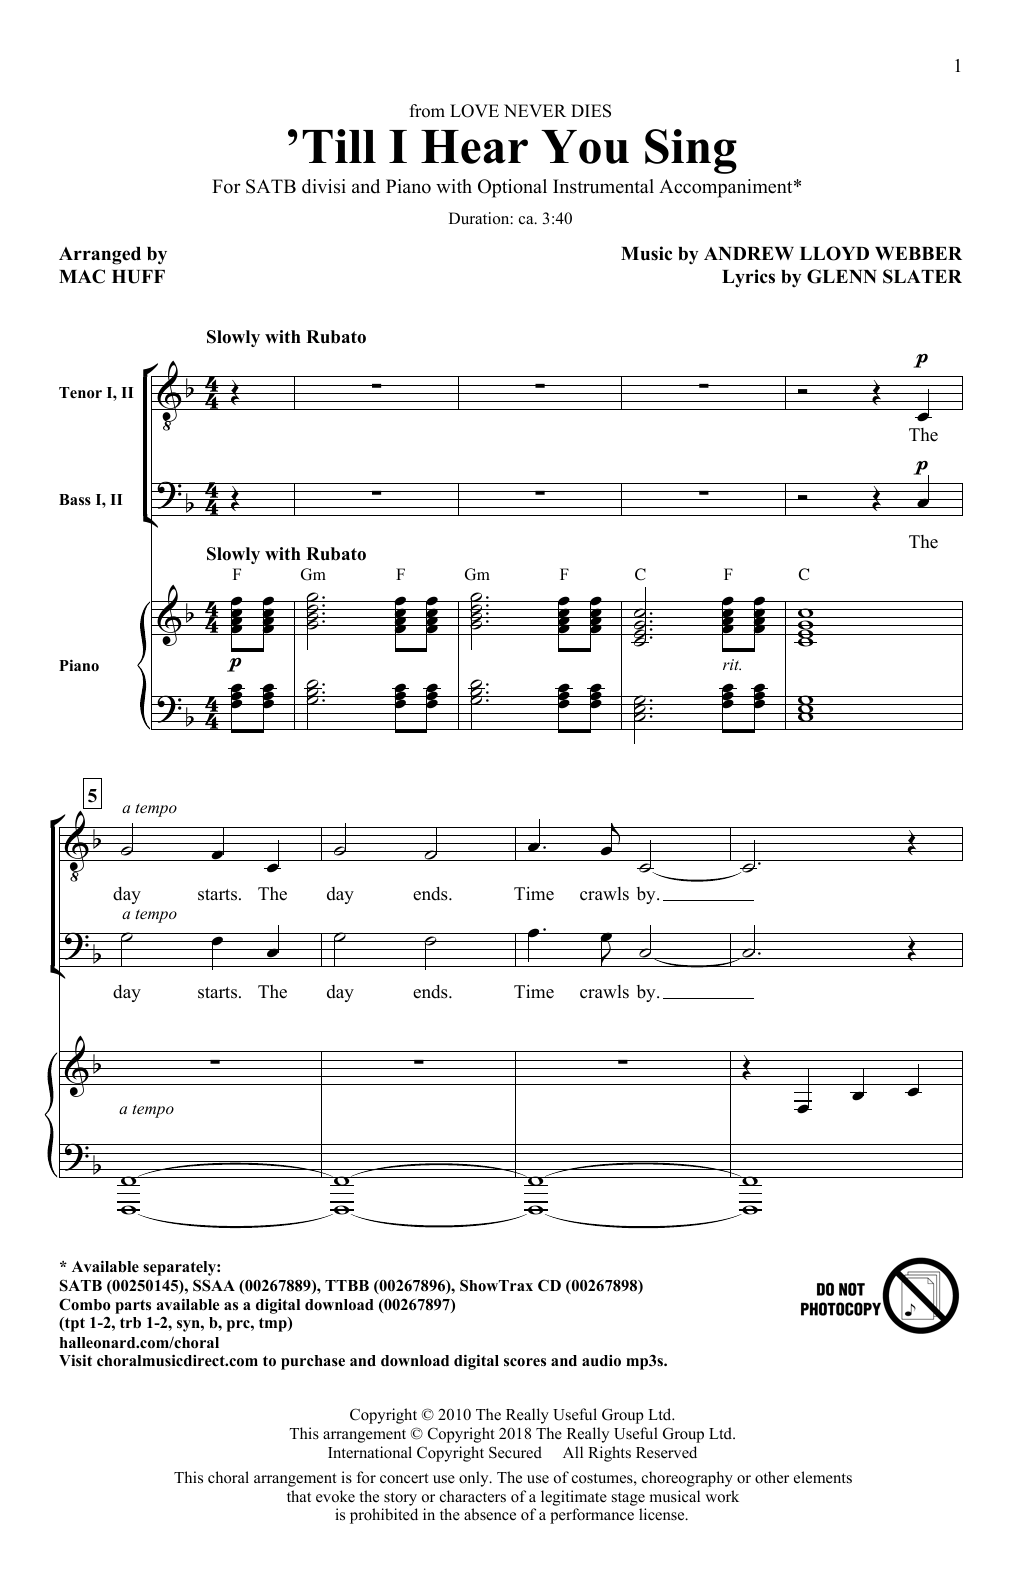 Andrew Lloyd Webber 'Til I Hear You Sing (arr. Mac Huff) Sheet Music Notes & Chords for TTBB Choir - Download or Print PDF